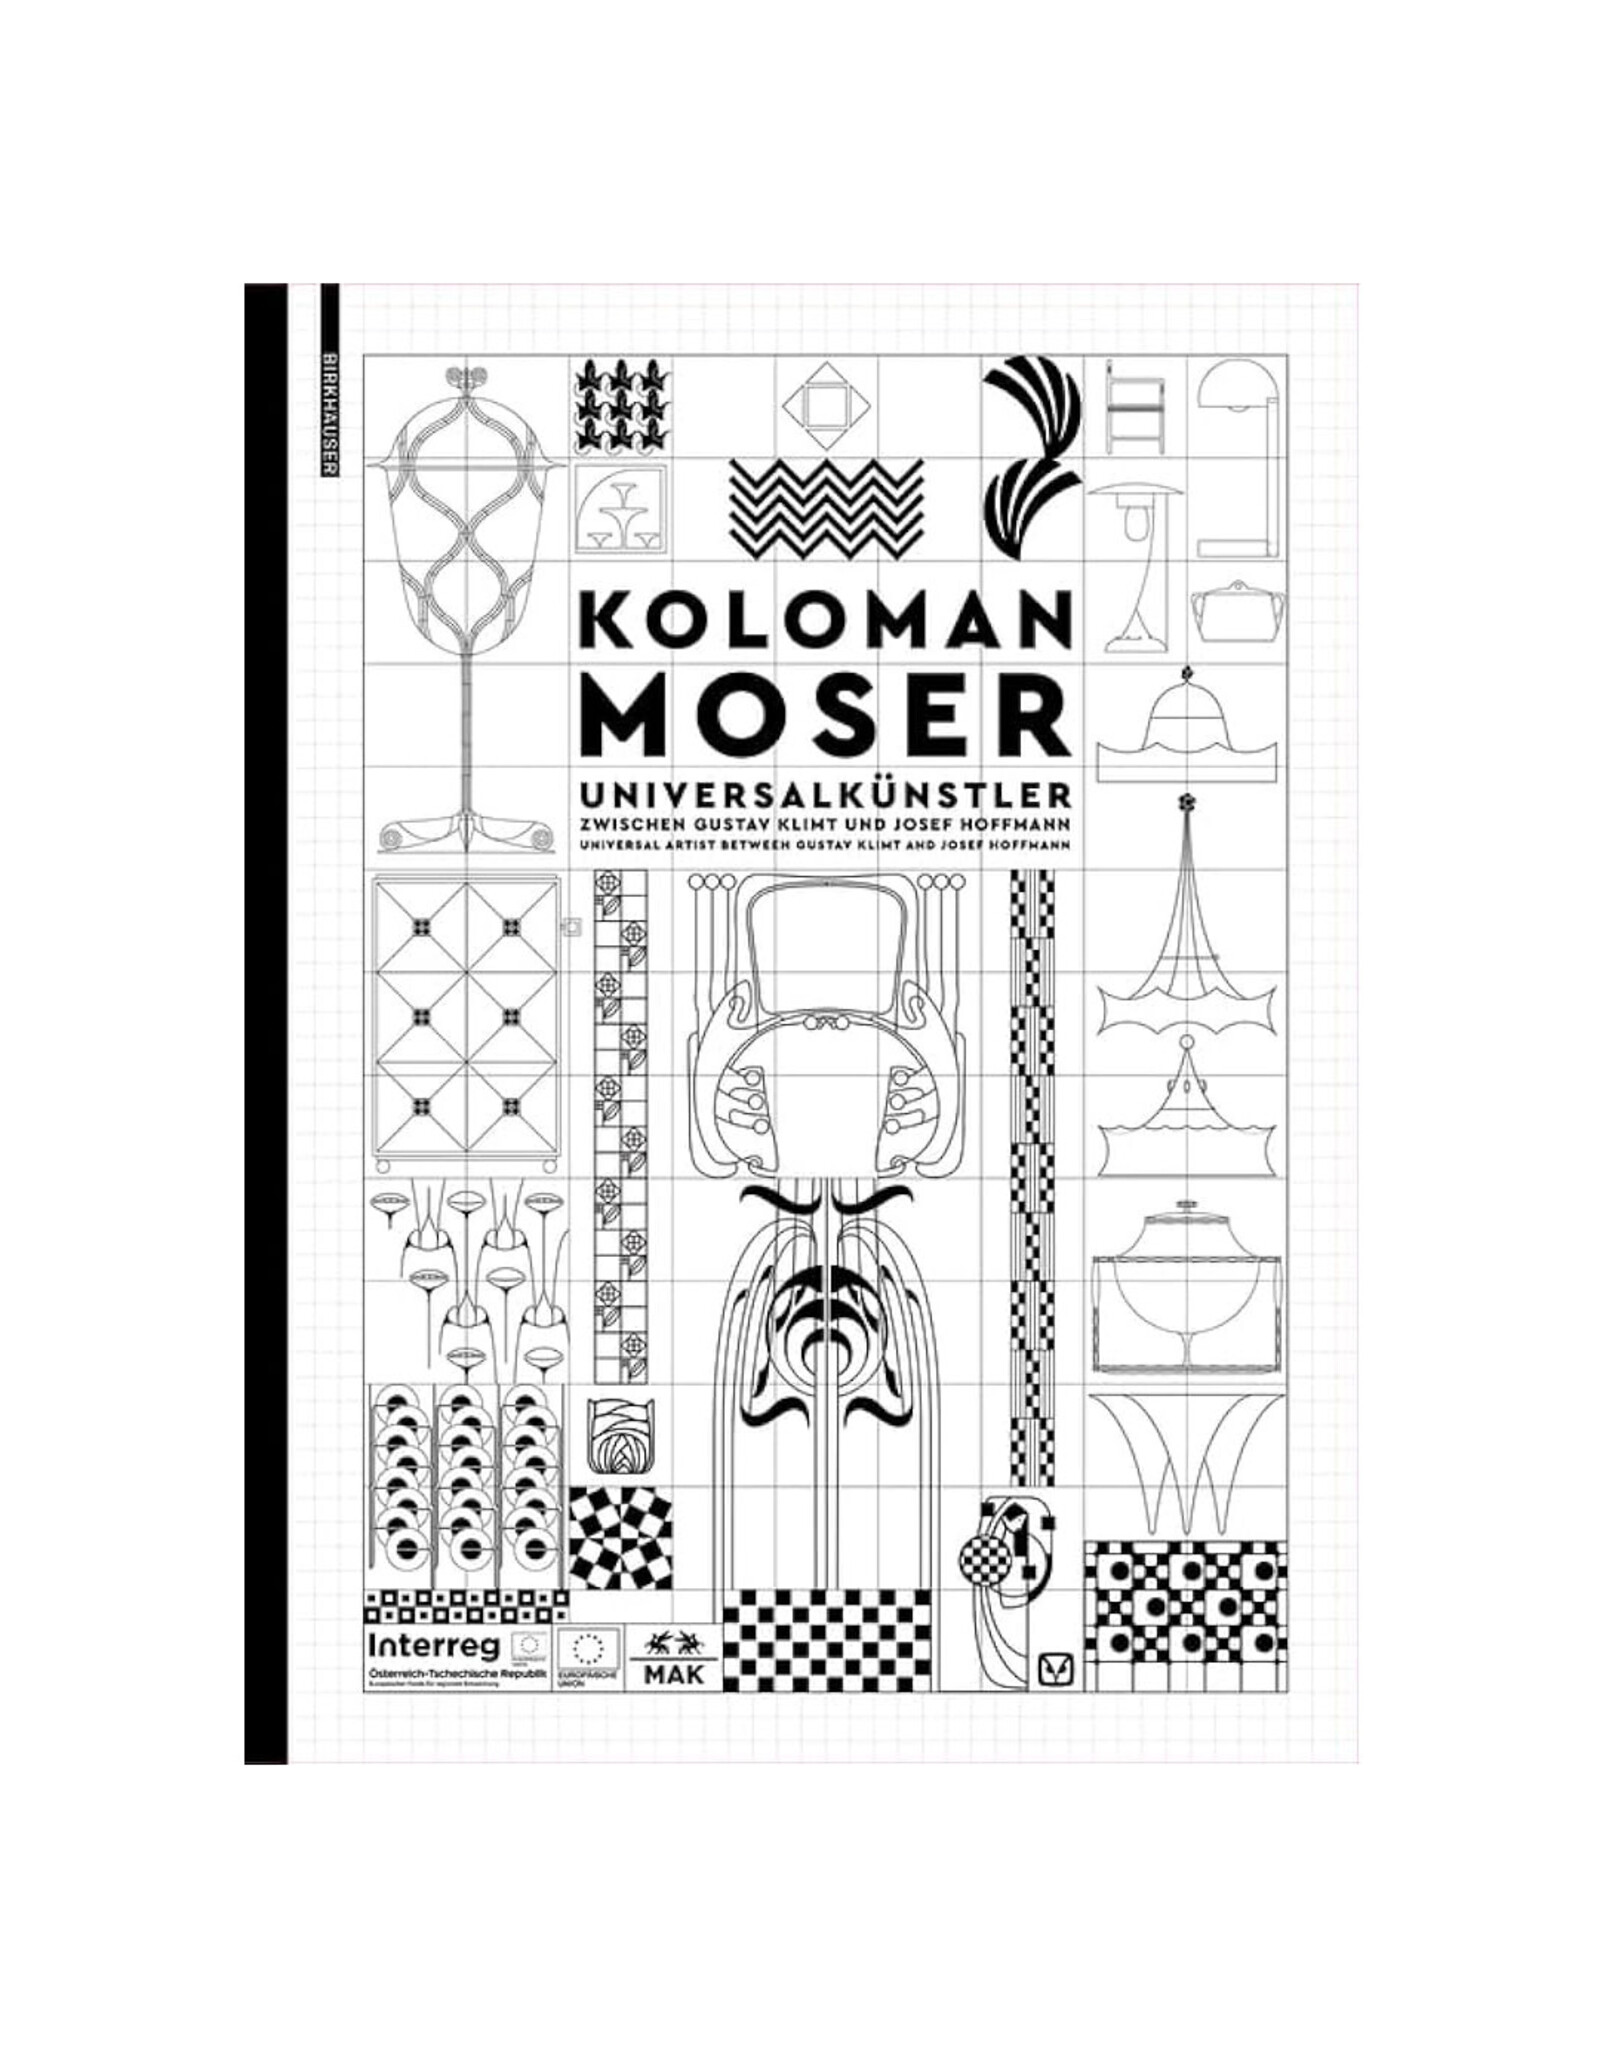 Kolman Moser: Universal Artist Between Gustav Klimt and Josef Hoffman